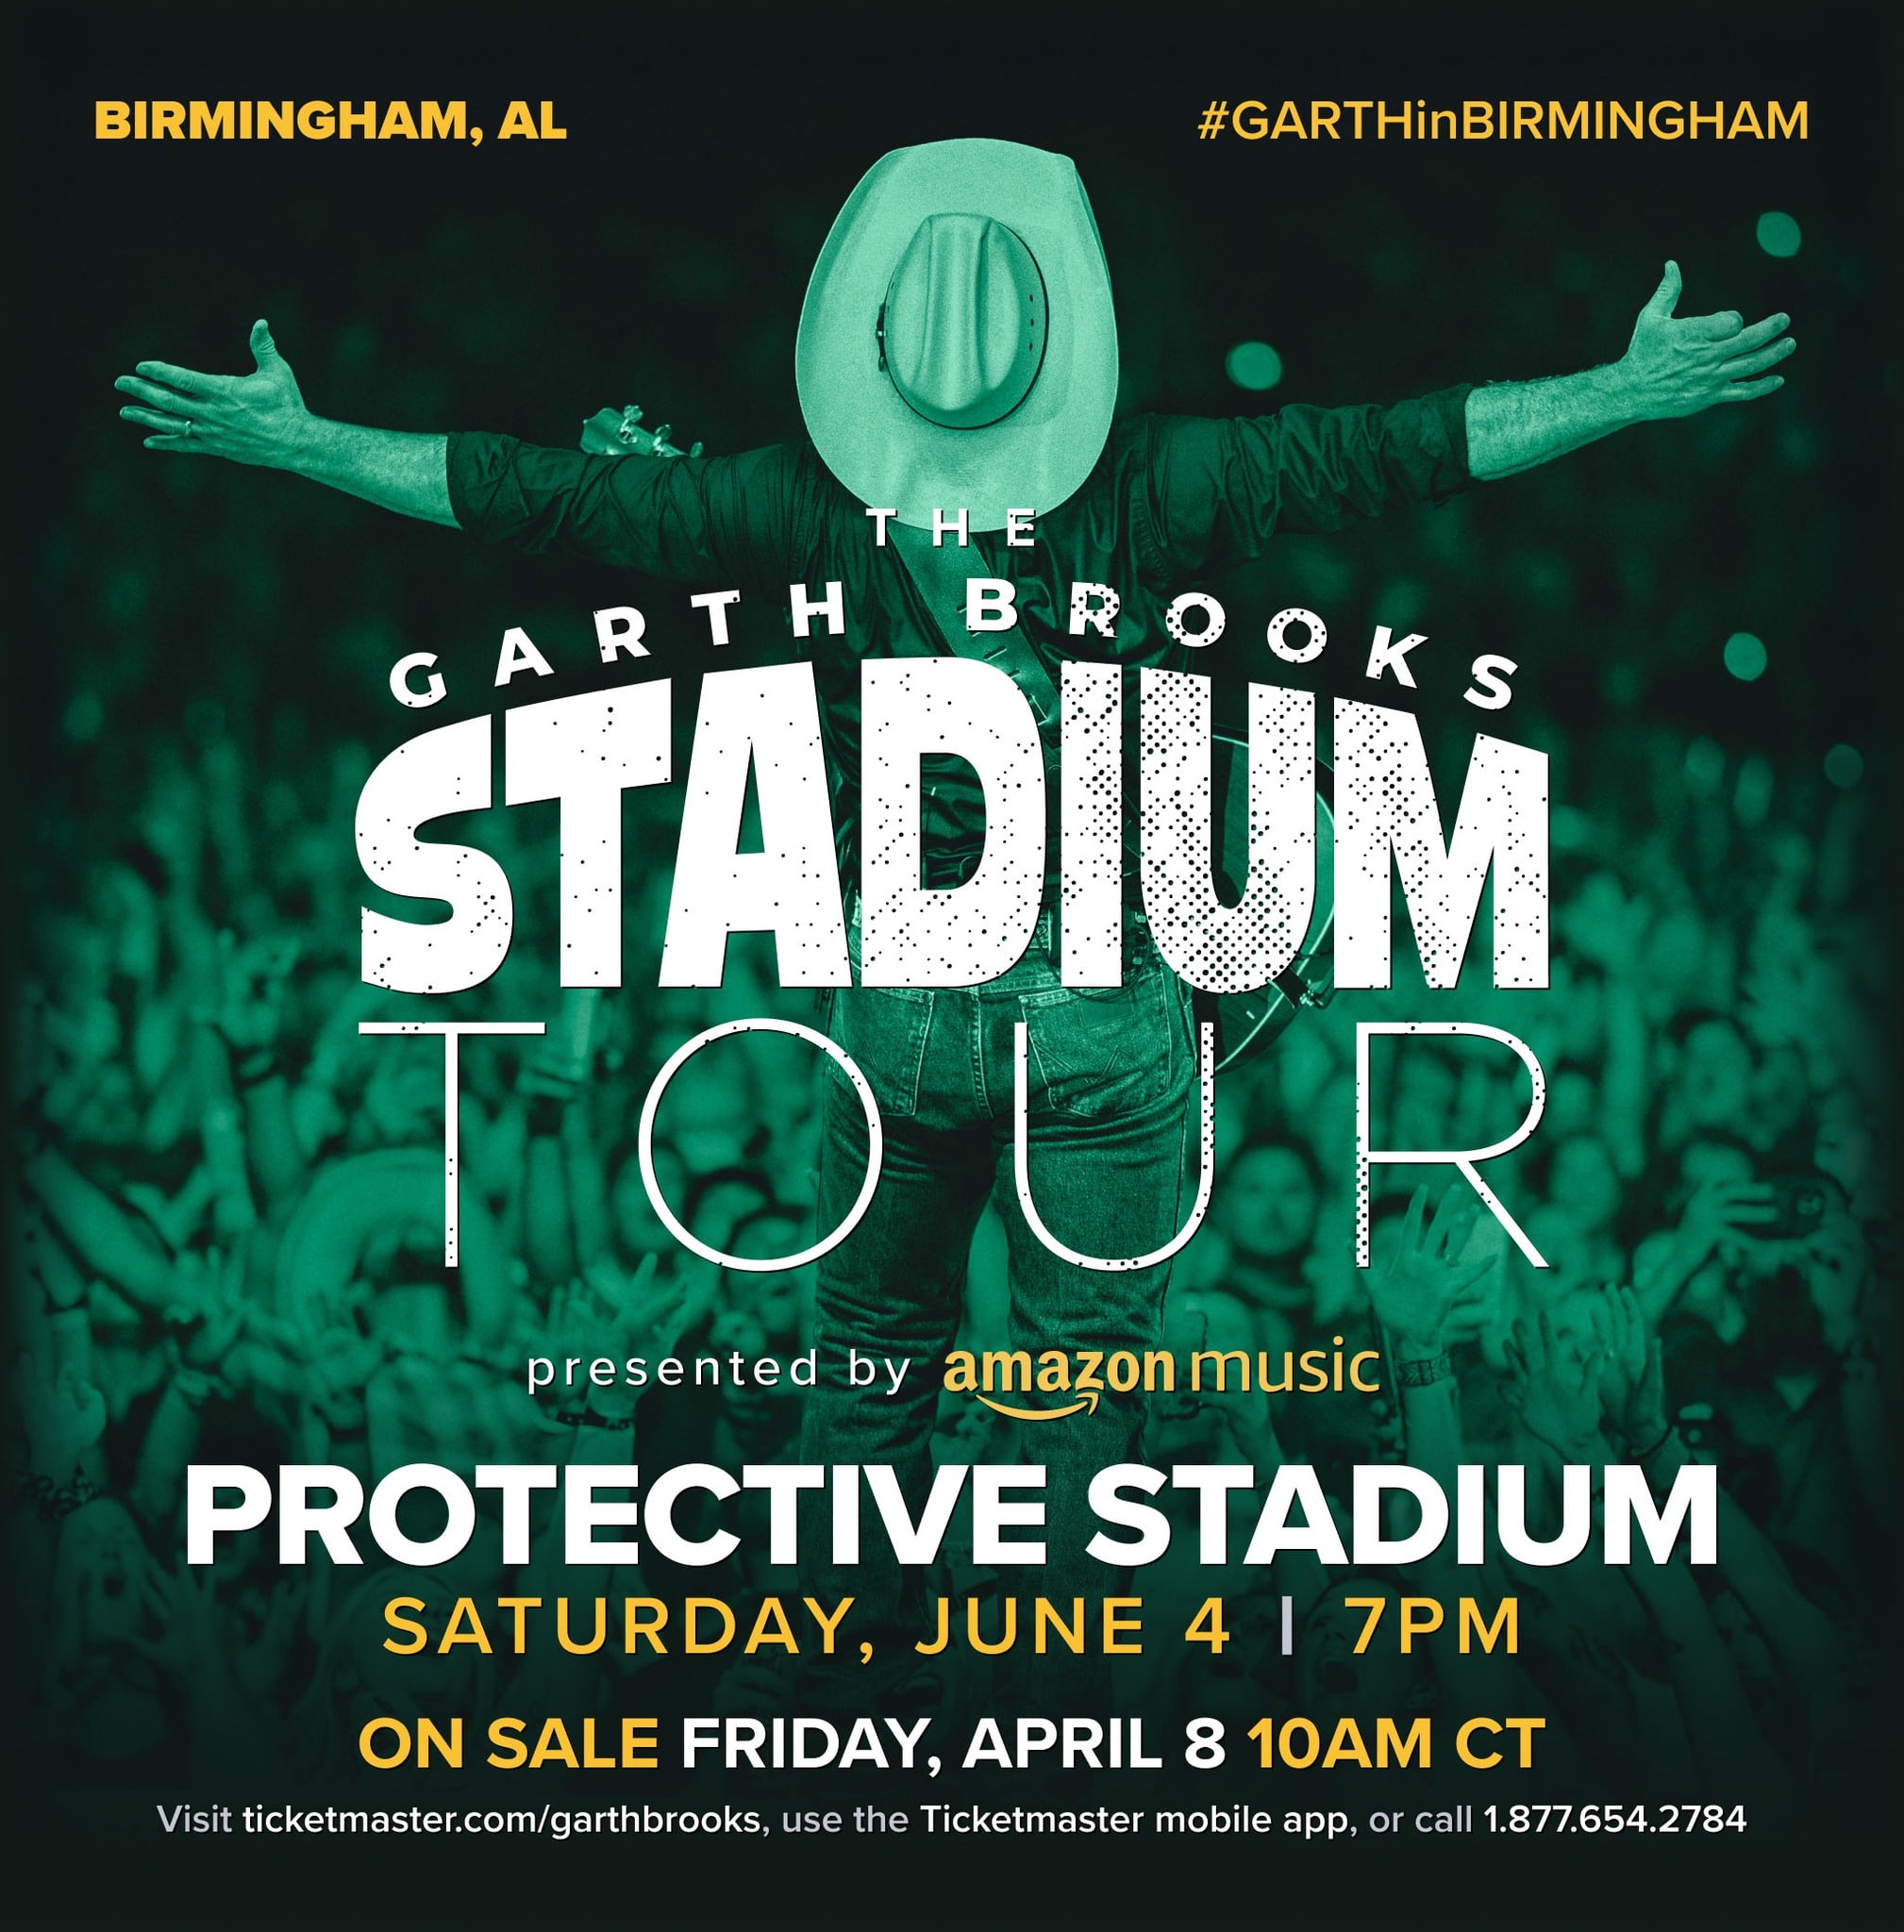 Garth Brooks playing at Birmingham's Protective Stadium June 4